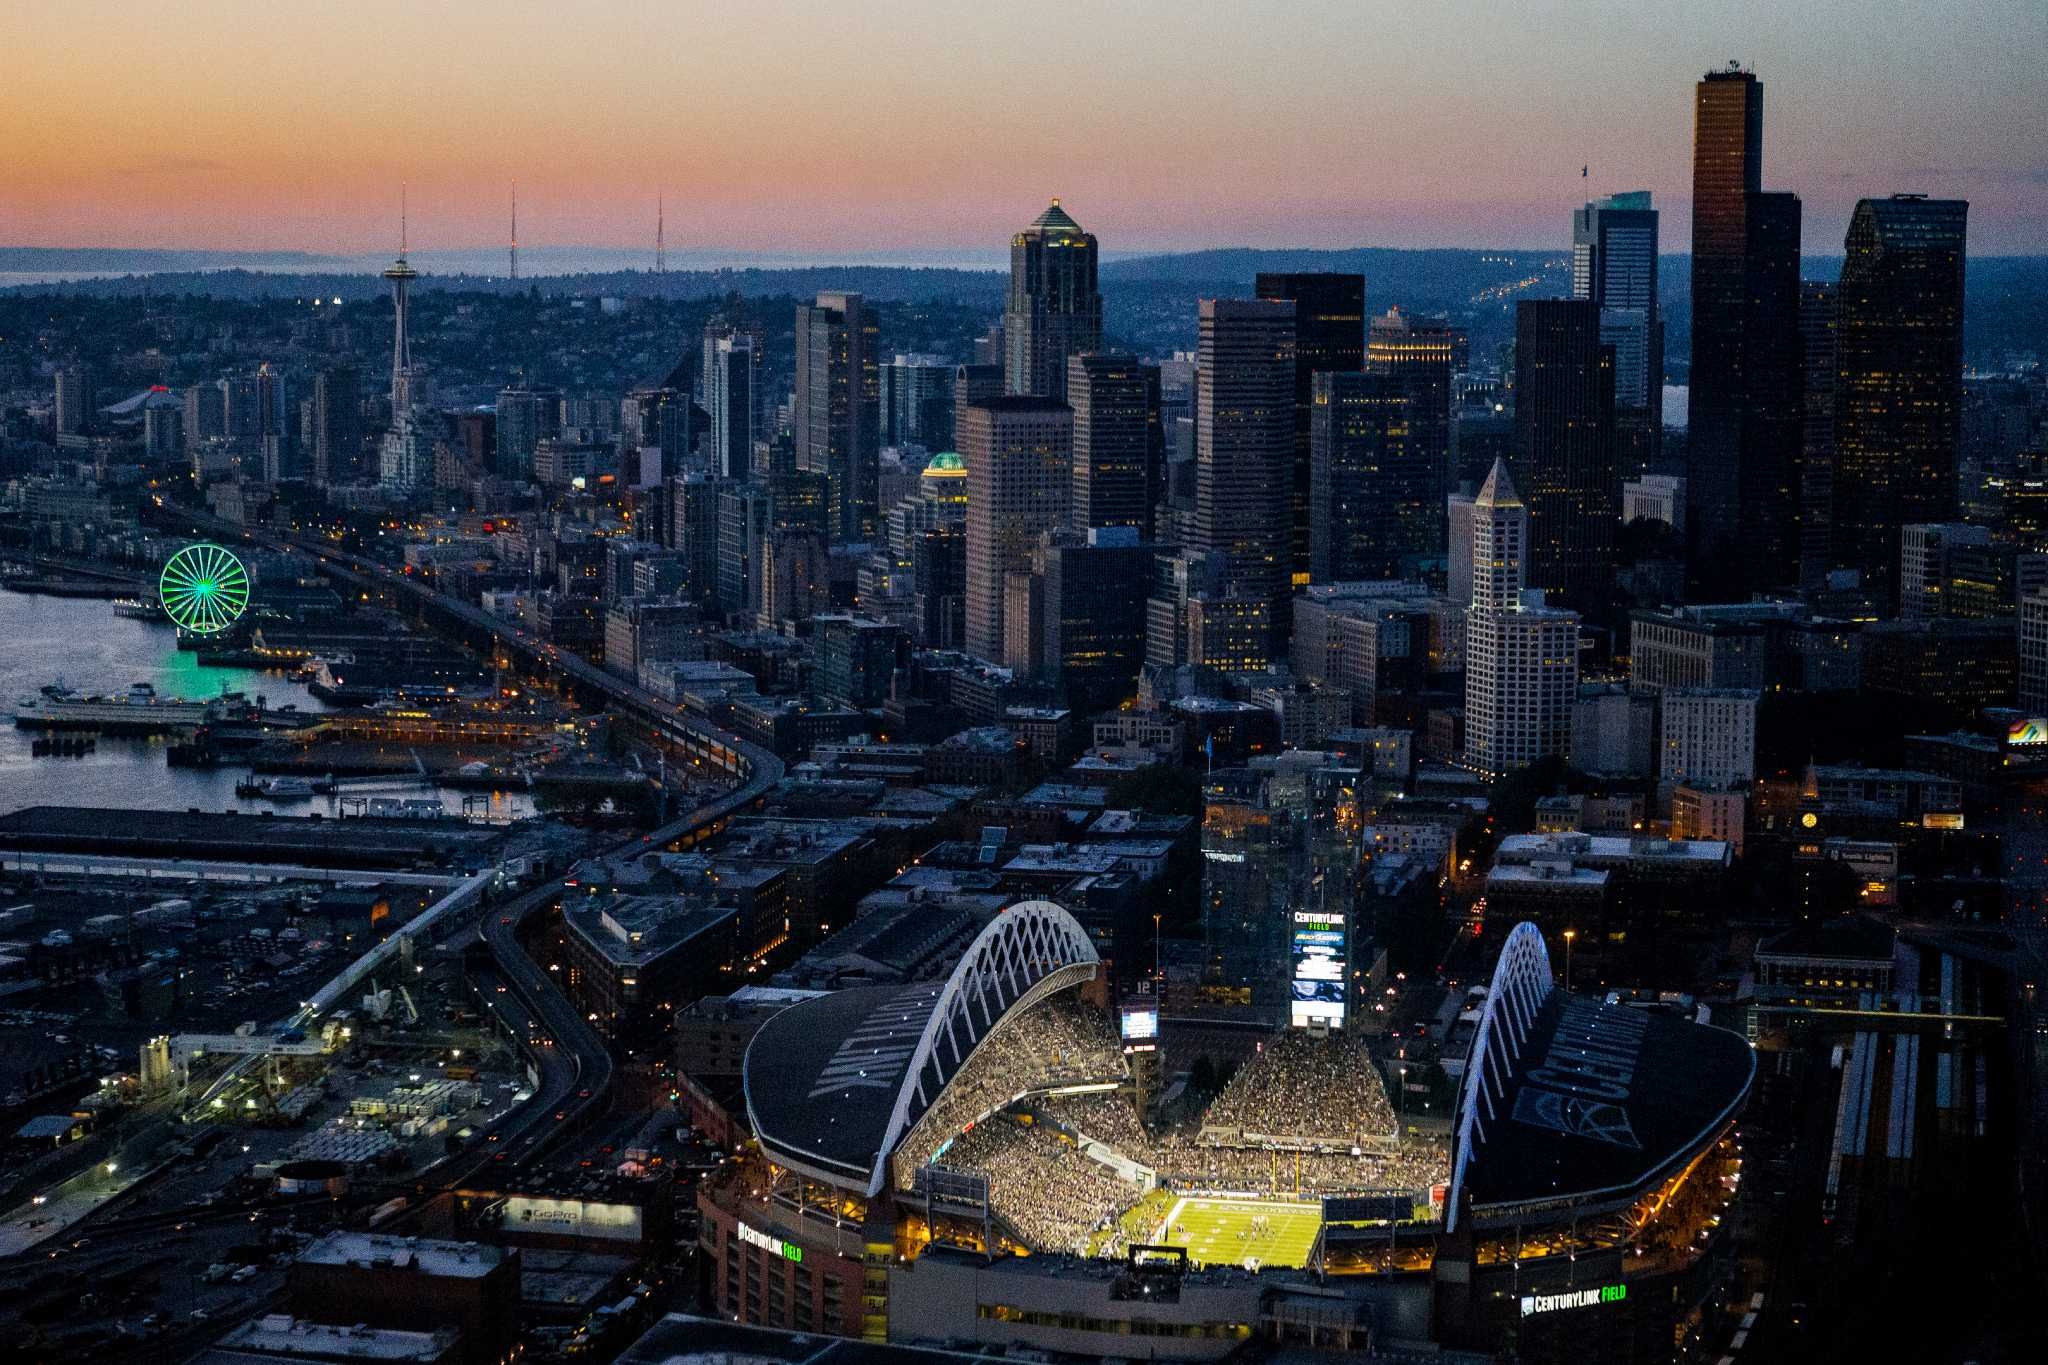 Seattle Seahawk Stadium Backgrounds | PixelsTalk.Net